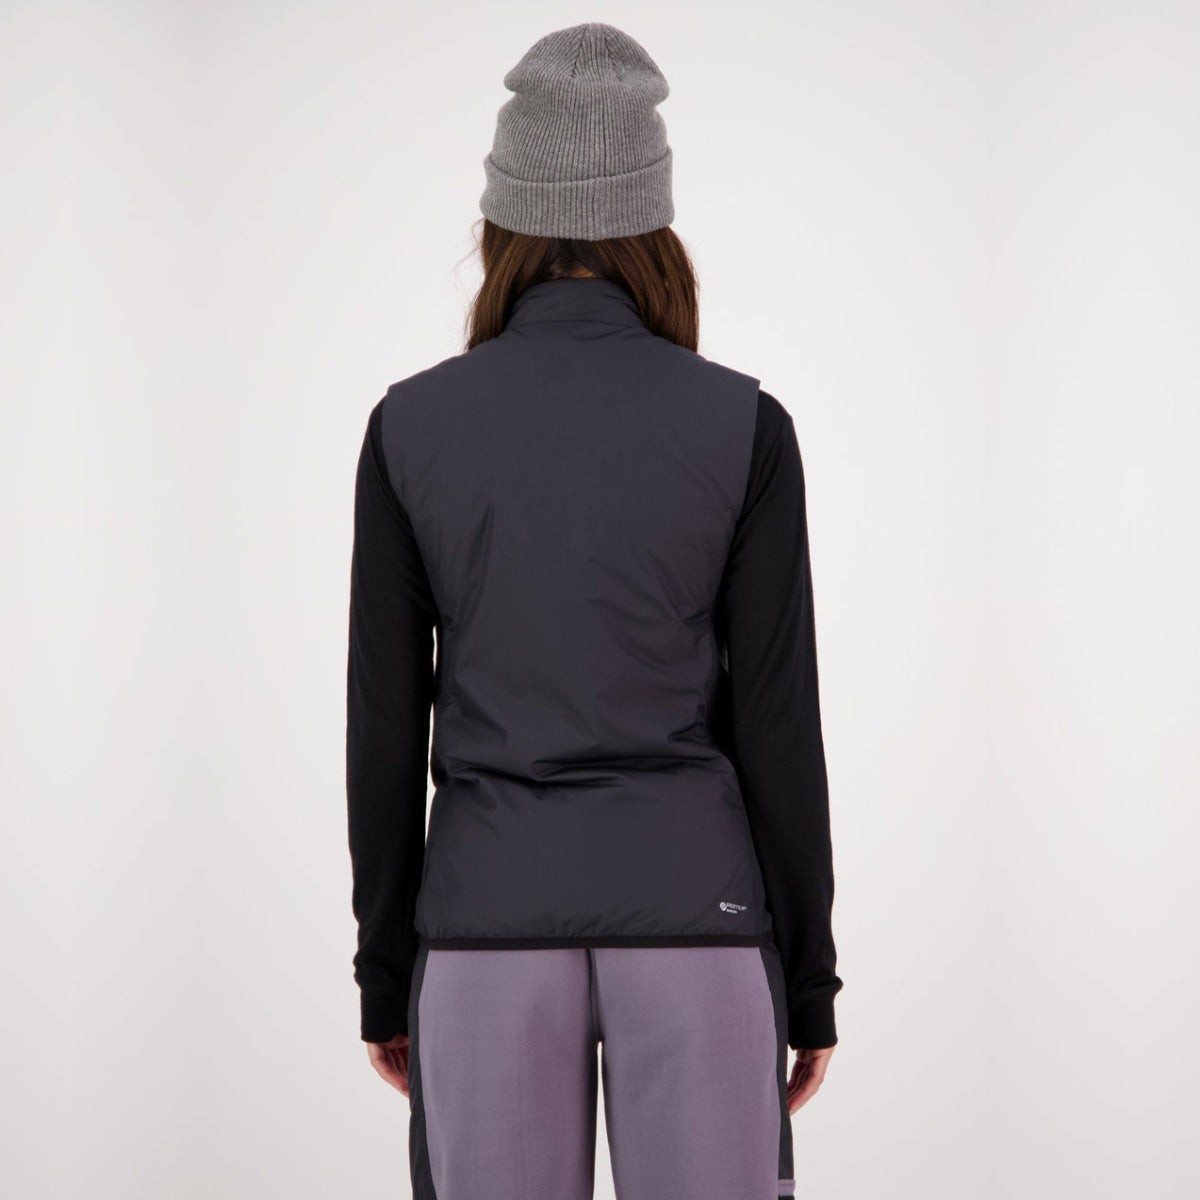 Mons Royale - Women's Arete Wool Insulation Vest - Black